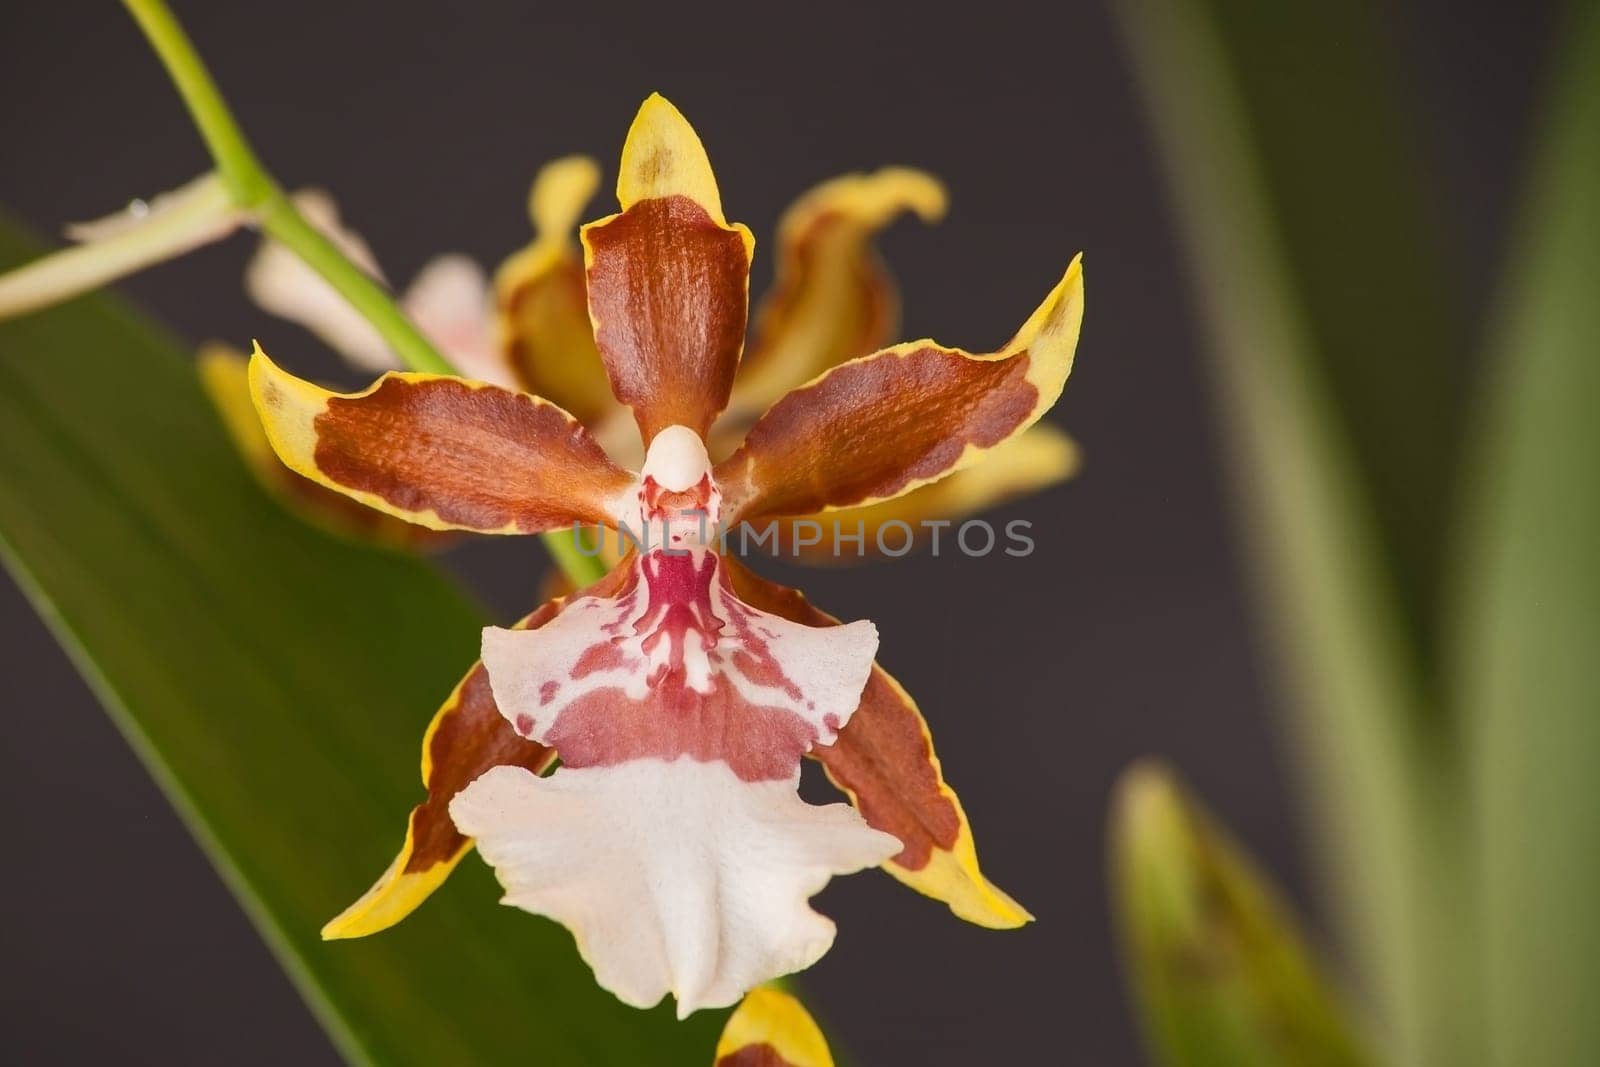 Dancing Lady Onicidium Orchid 13019 by kobus_peche